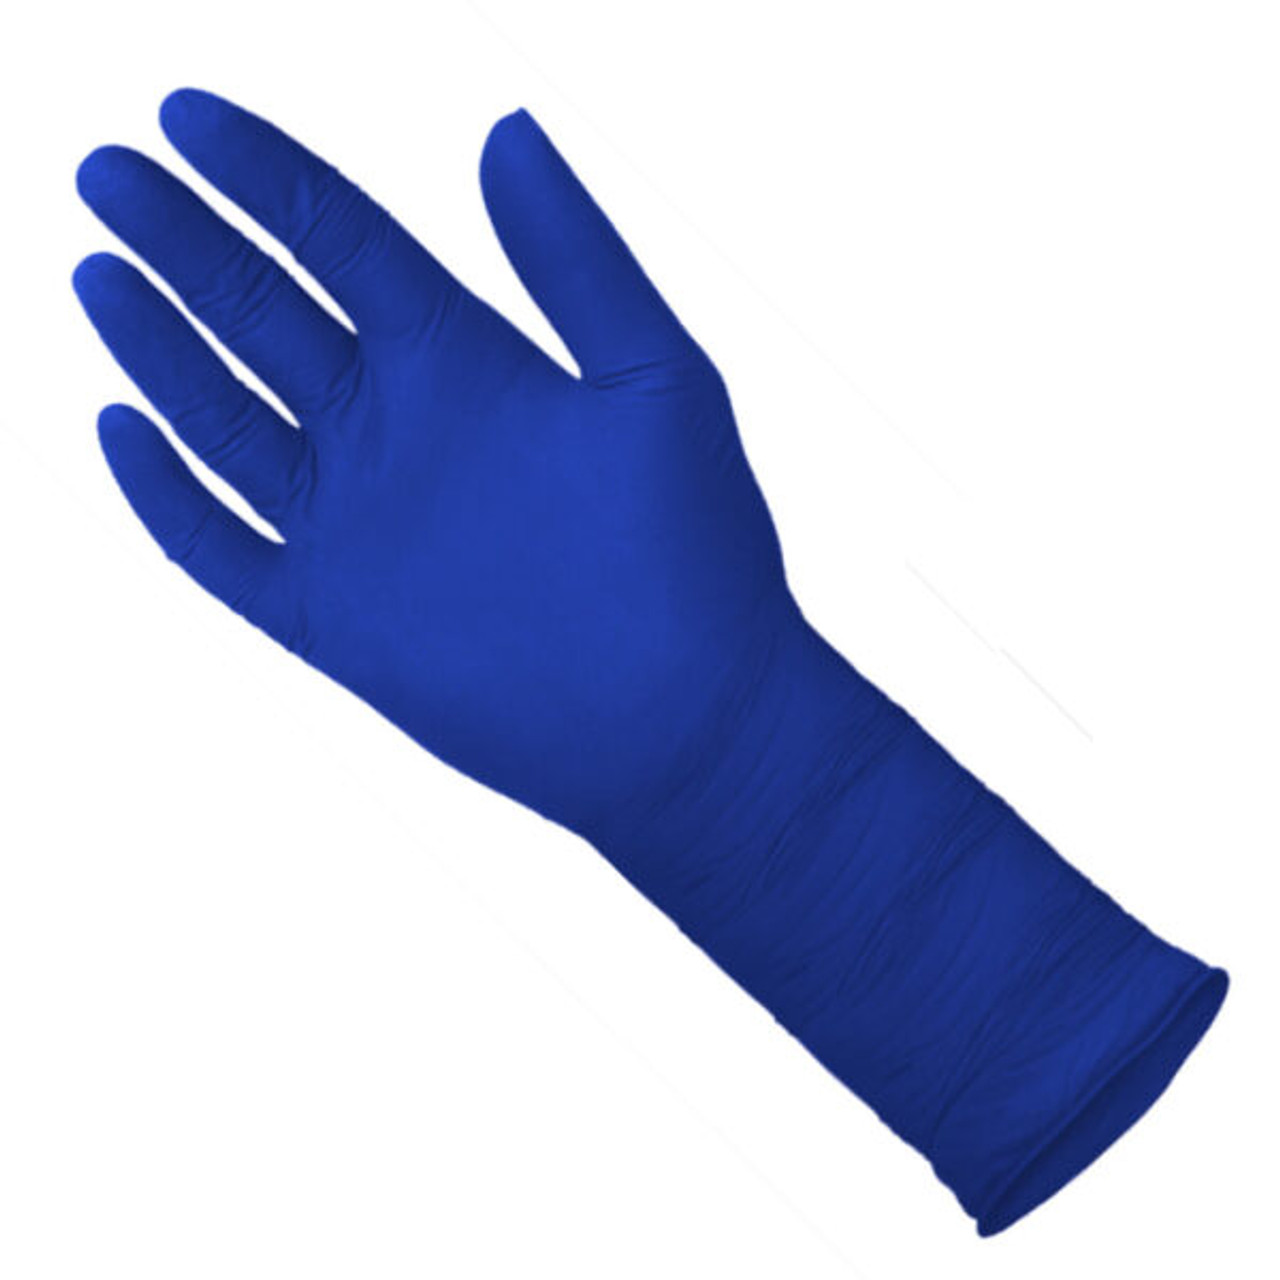 Medgluv Nitriskin XP Nitrile Exam Glove, 8mil Chemo Tested, Textured, X-Large 50/bx, 10/cs